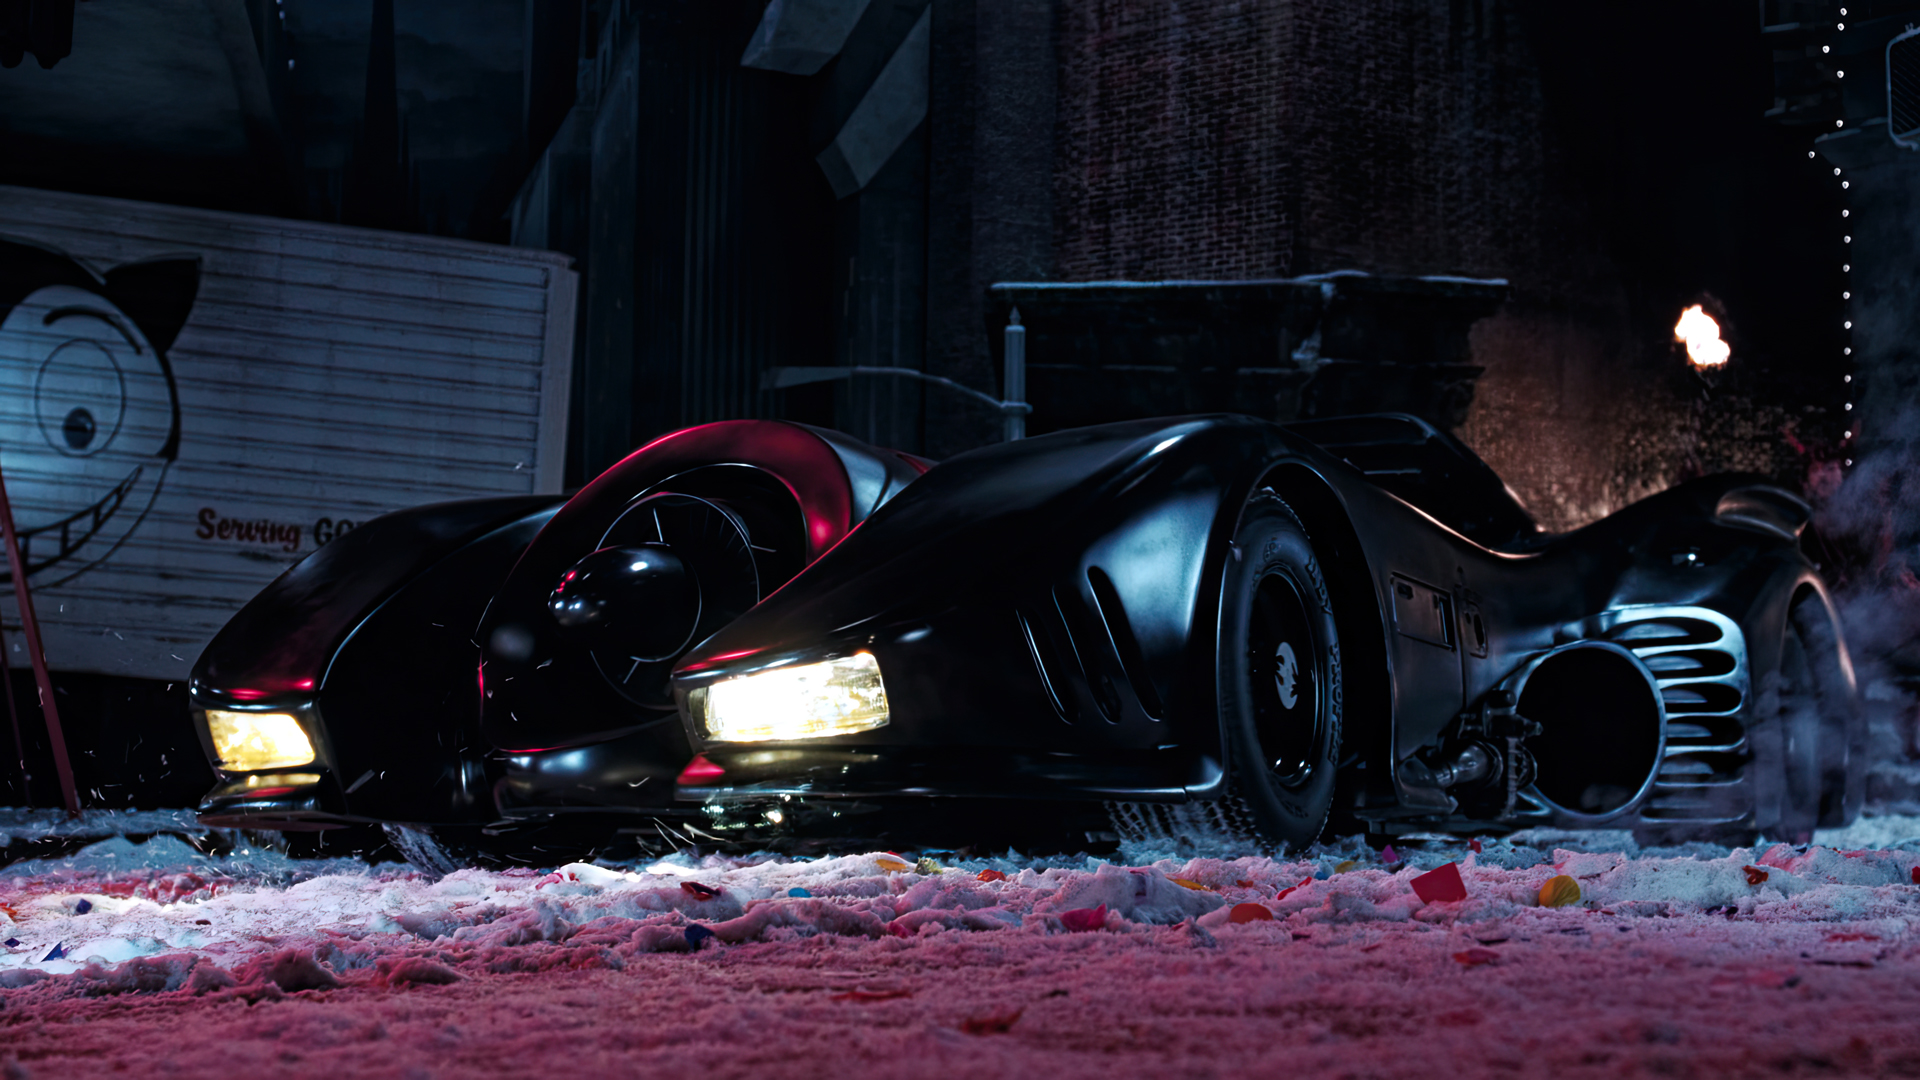 Batman Returns Batmobile Movies Film Stills Snow Street Gotham City Headlights Front Angle View Vehi 1920x1080